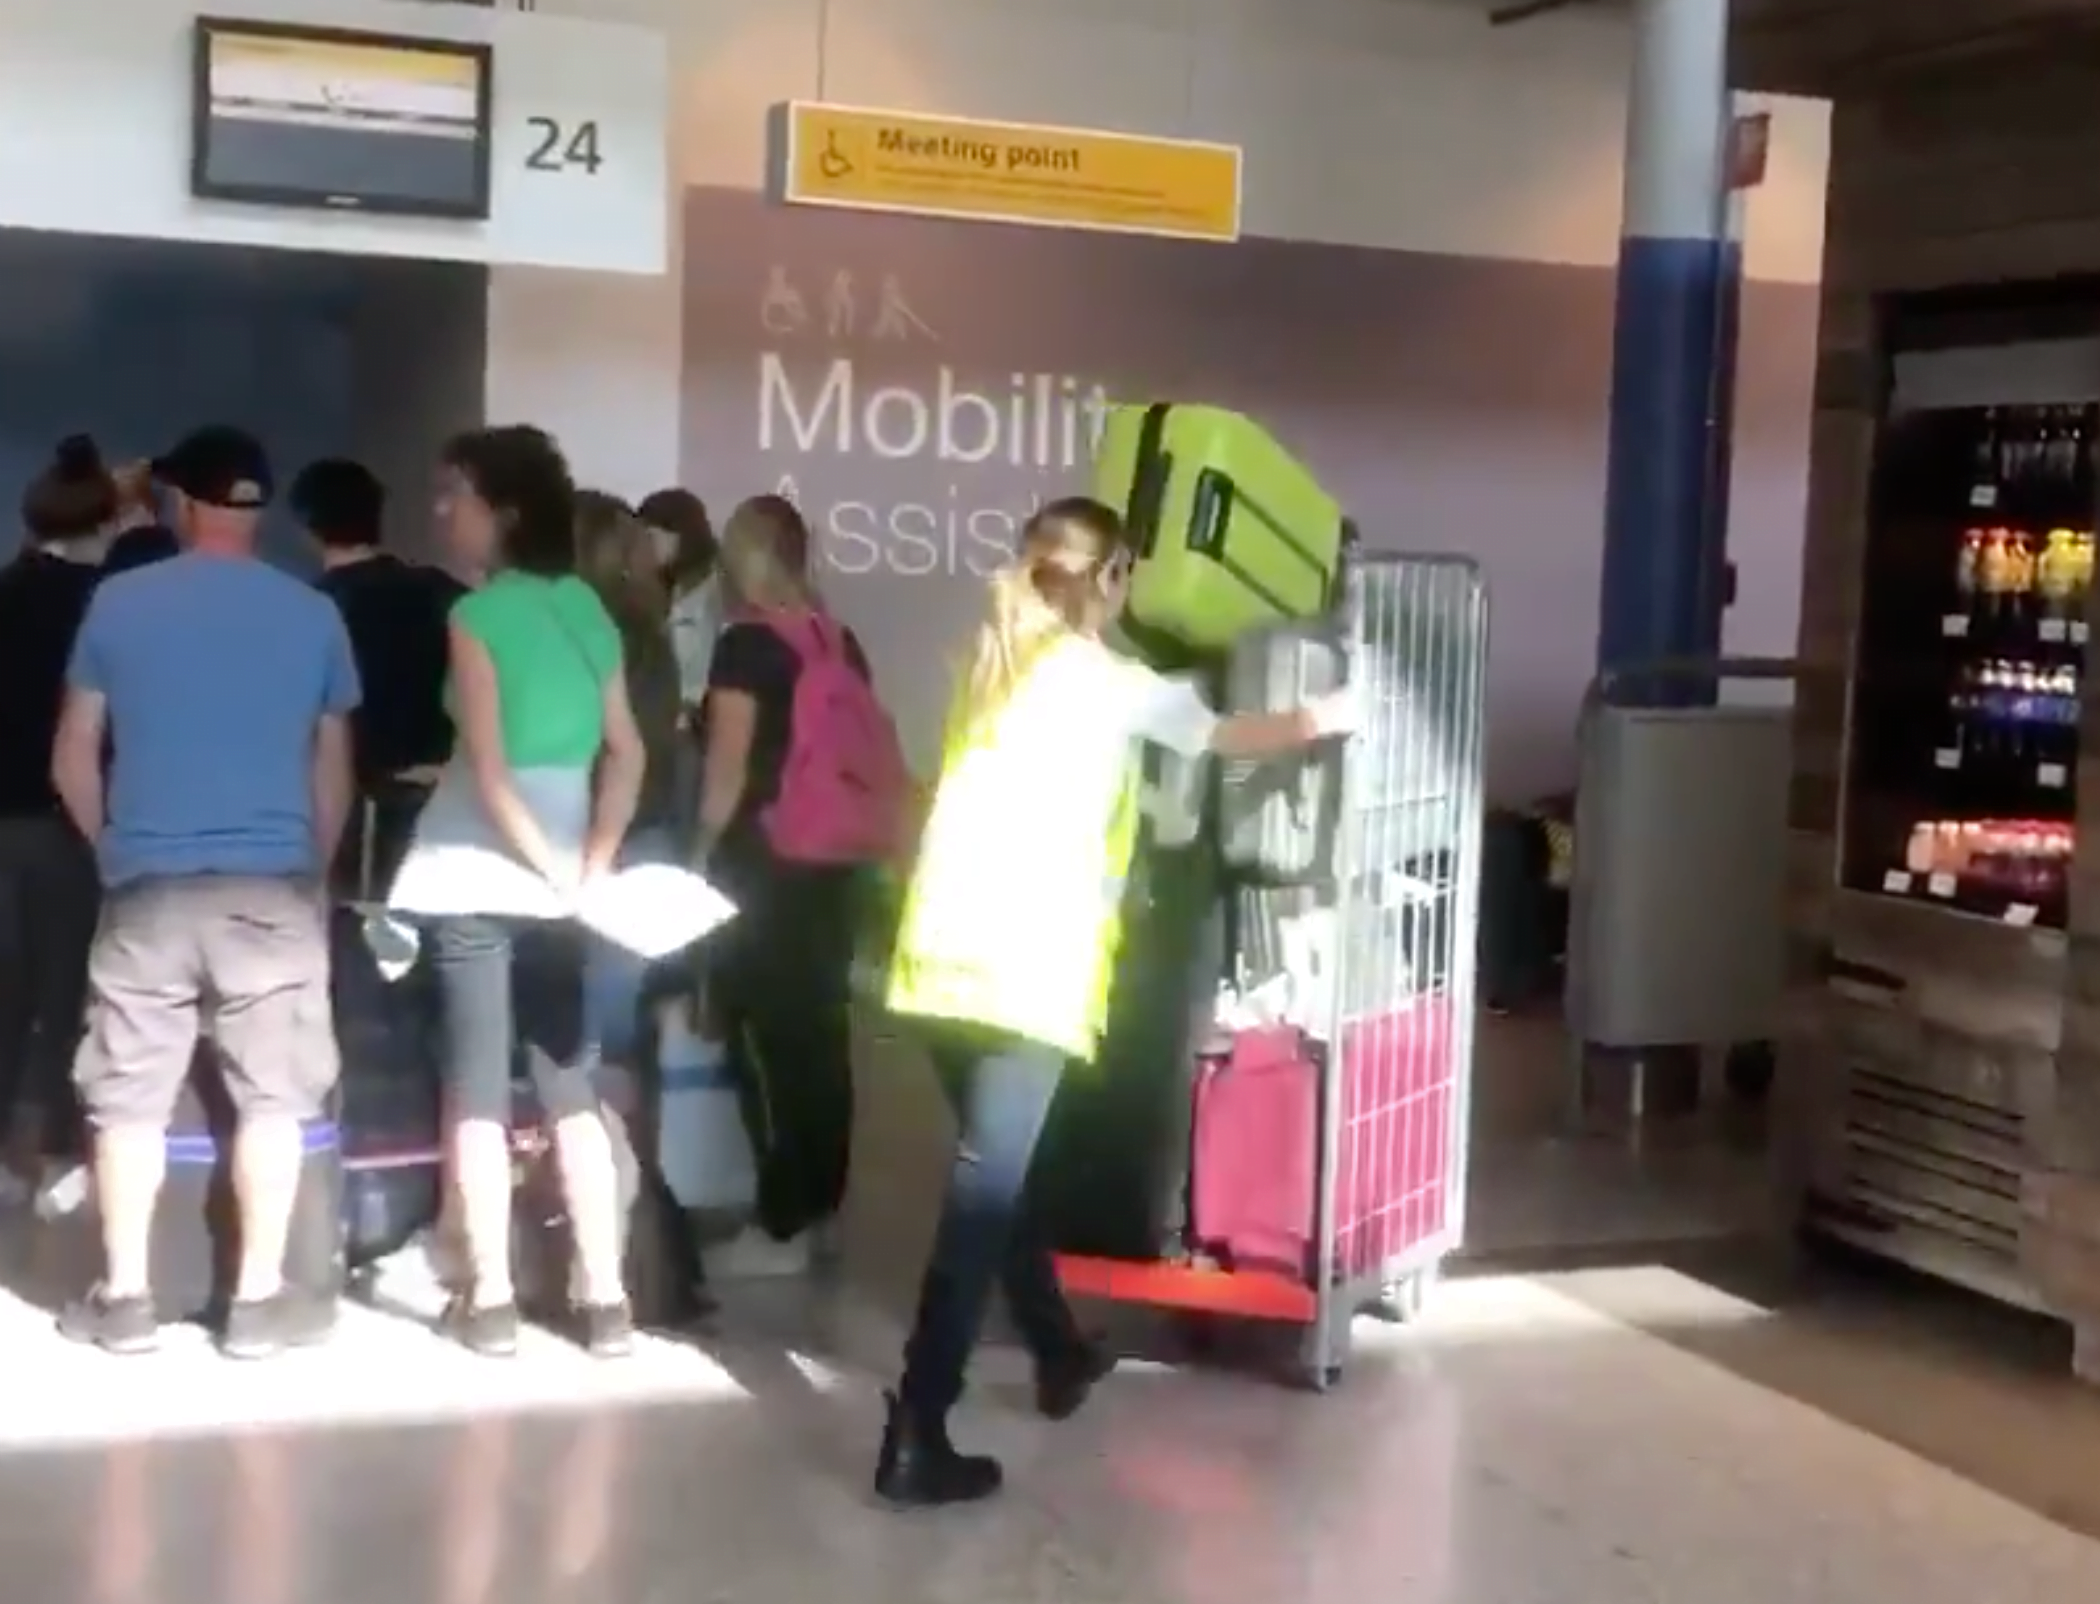 Outro problema com o manuseio de bagagem no aeroporto de Eindhoven